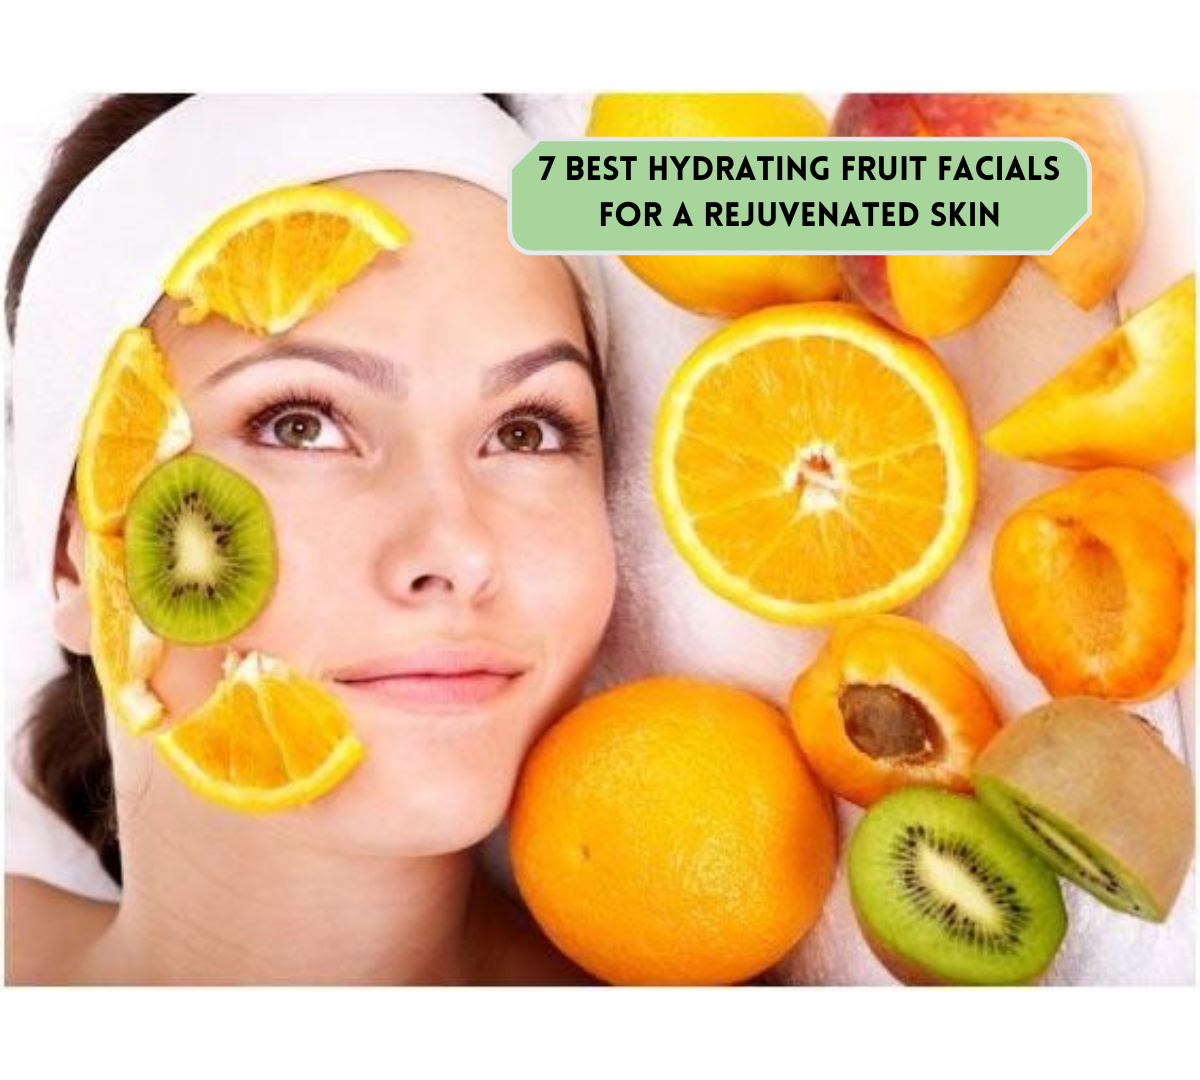 Best Hydrating Fruit Facials For a rejuvenated skin